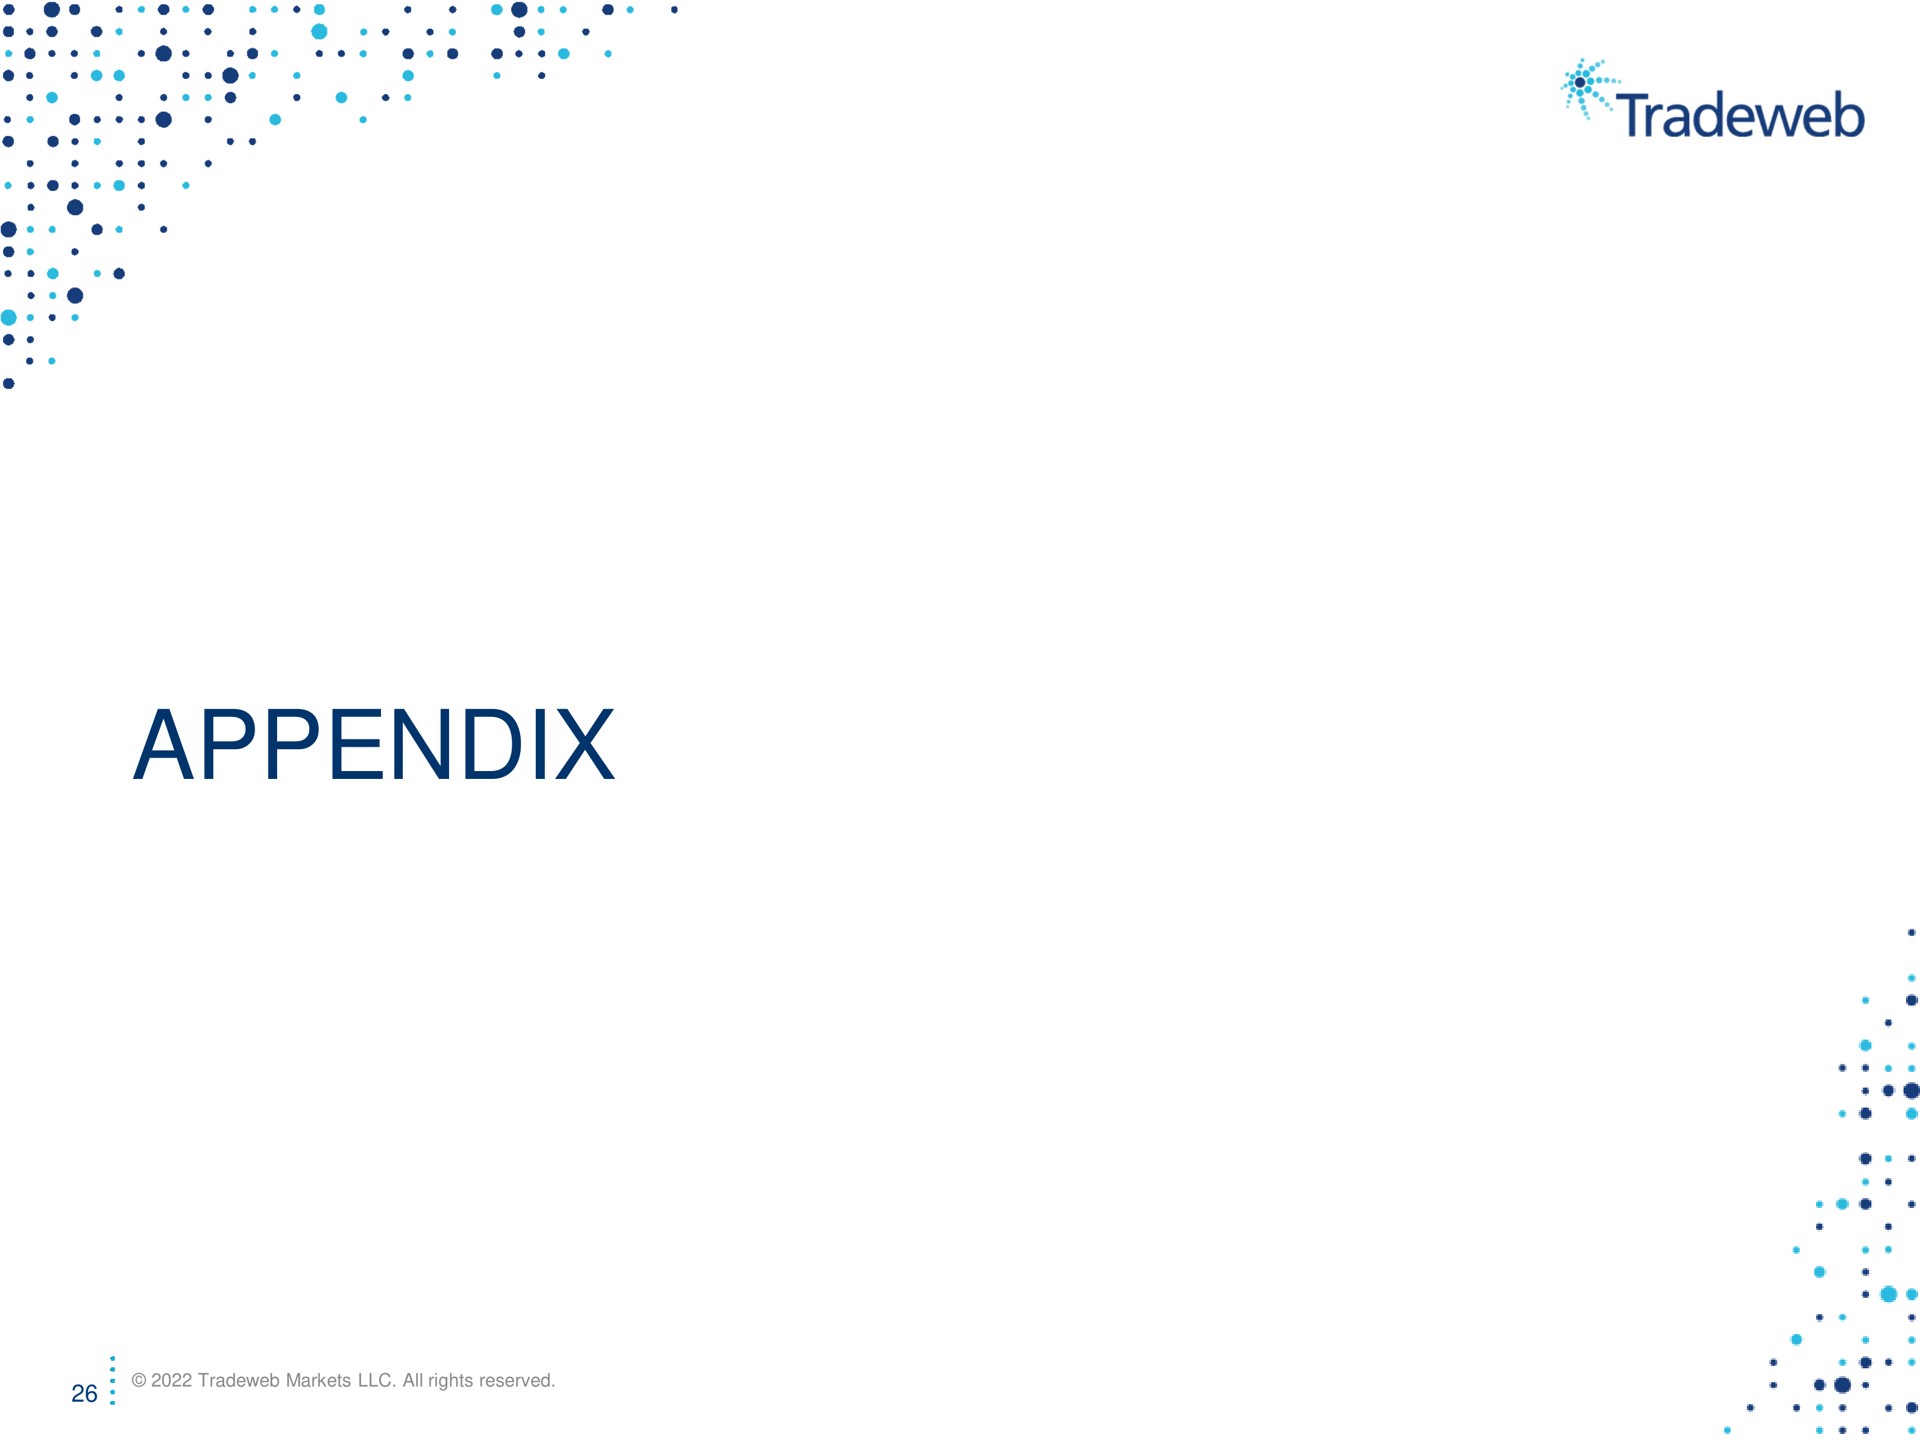 appendix | Tradeweb